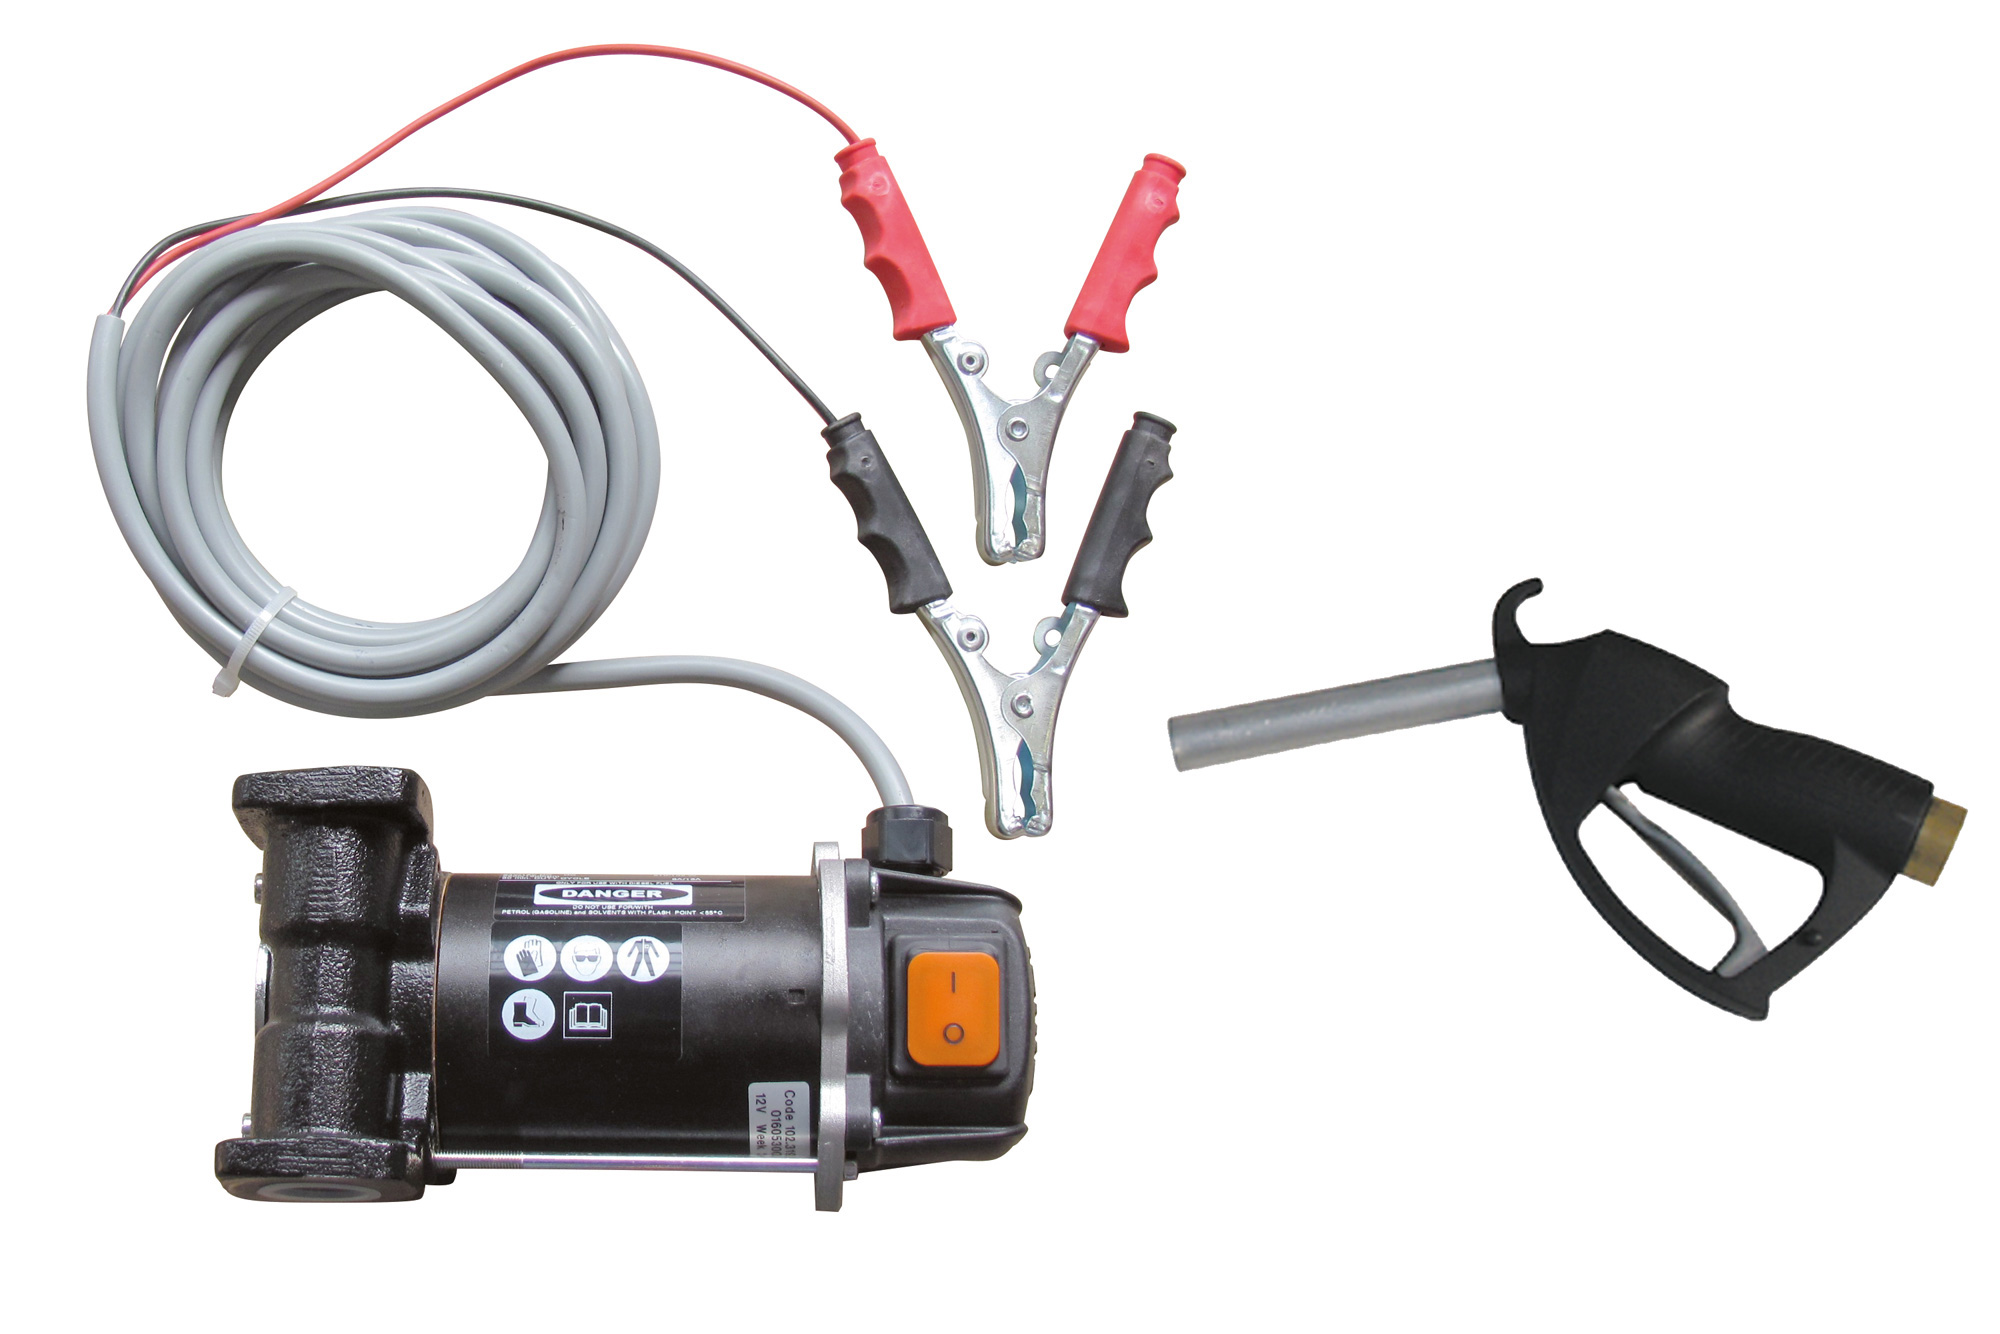 Elektro-Pumpe Cematic 3000 mit 24 V und Zapfpistole